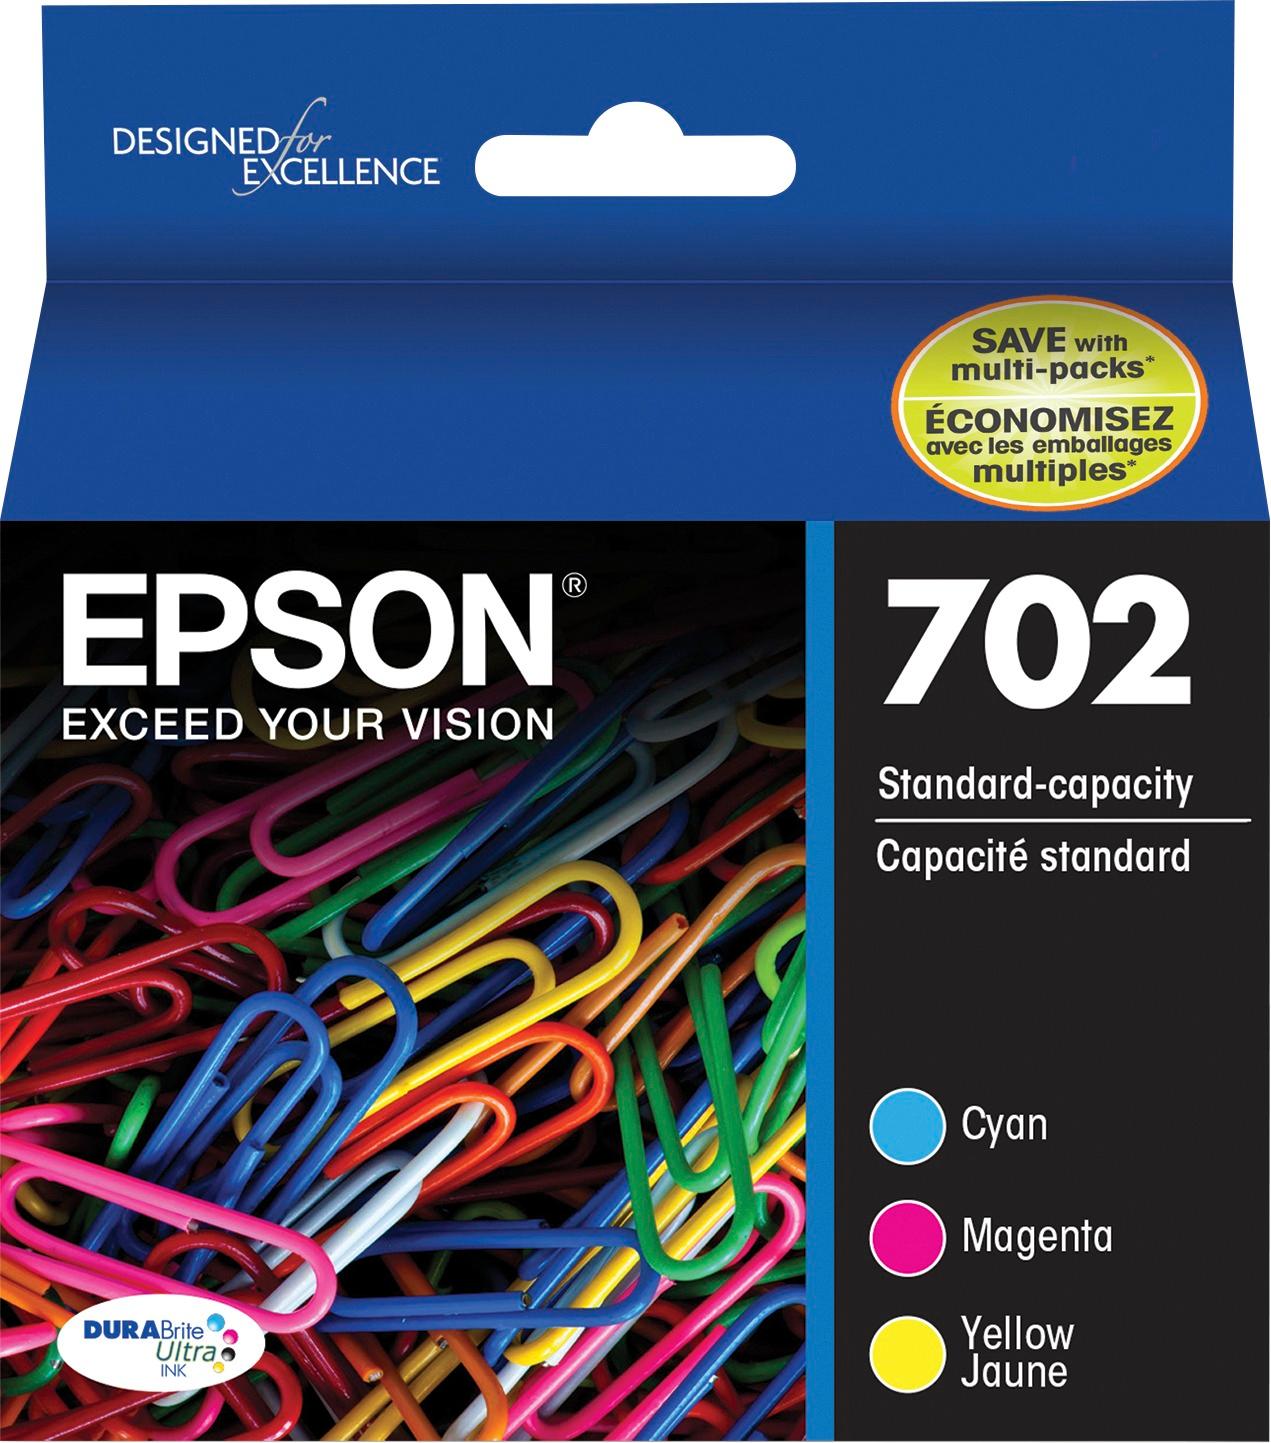 Epson - 702 3-Pack Standard Capacity Ink Cartridges - Cyan/Magenta/Yellow